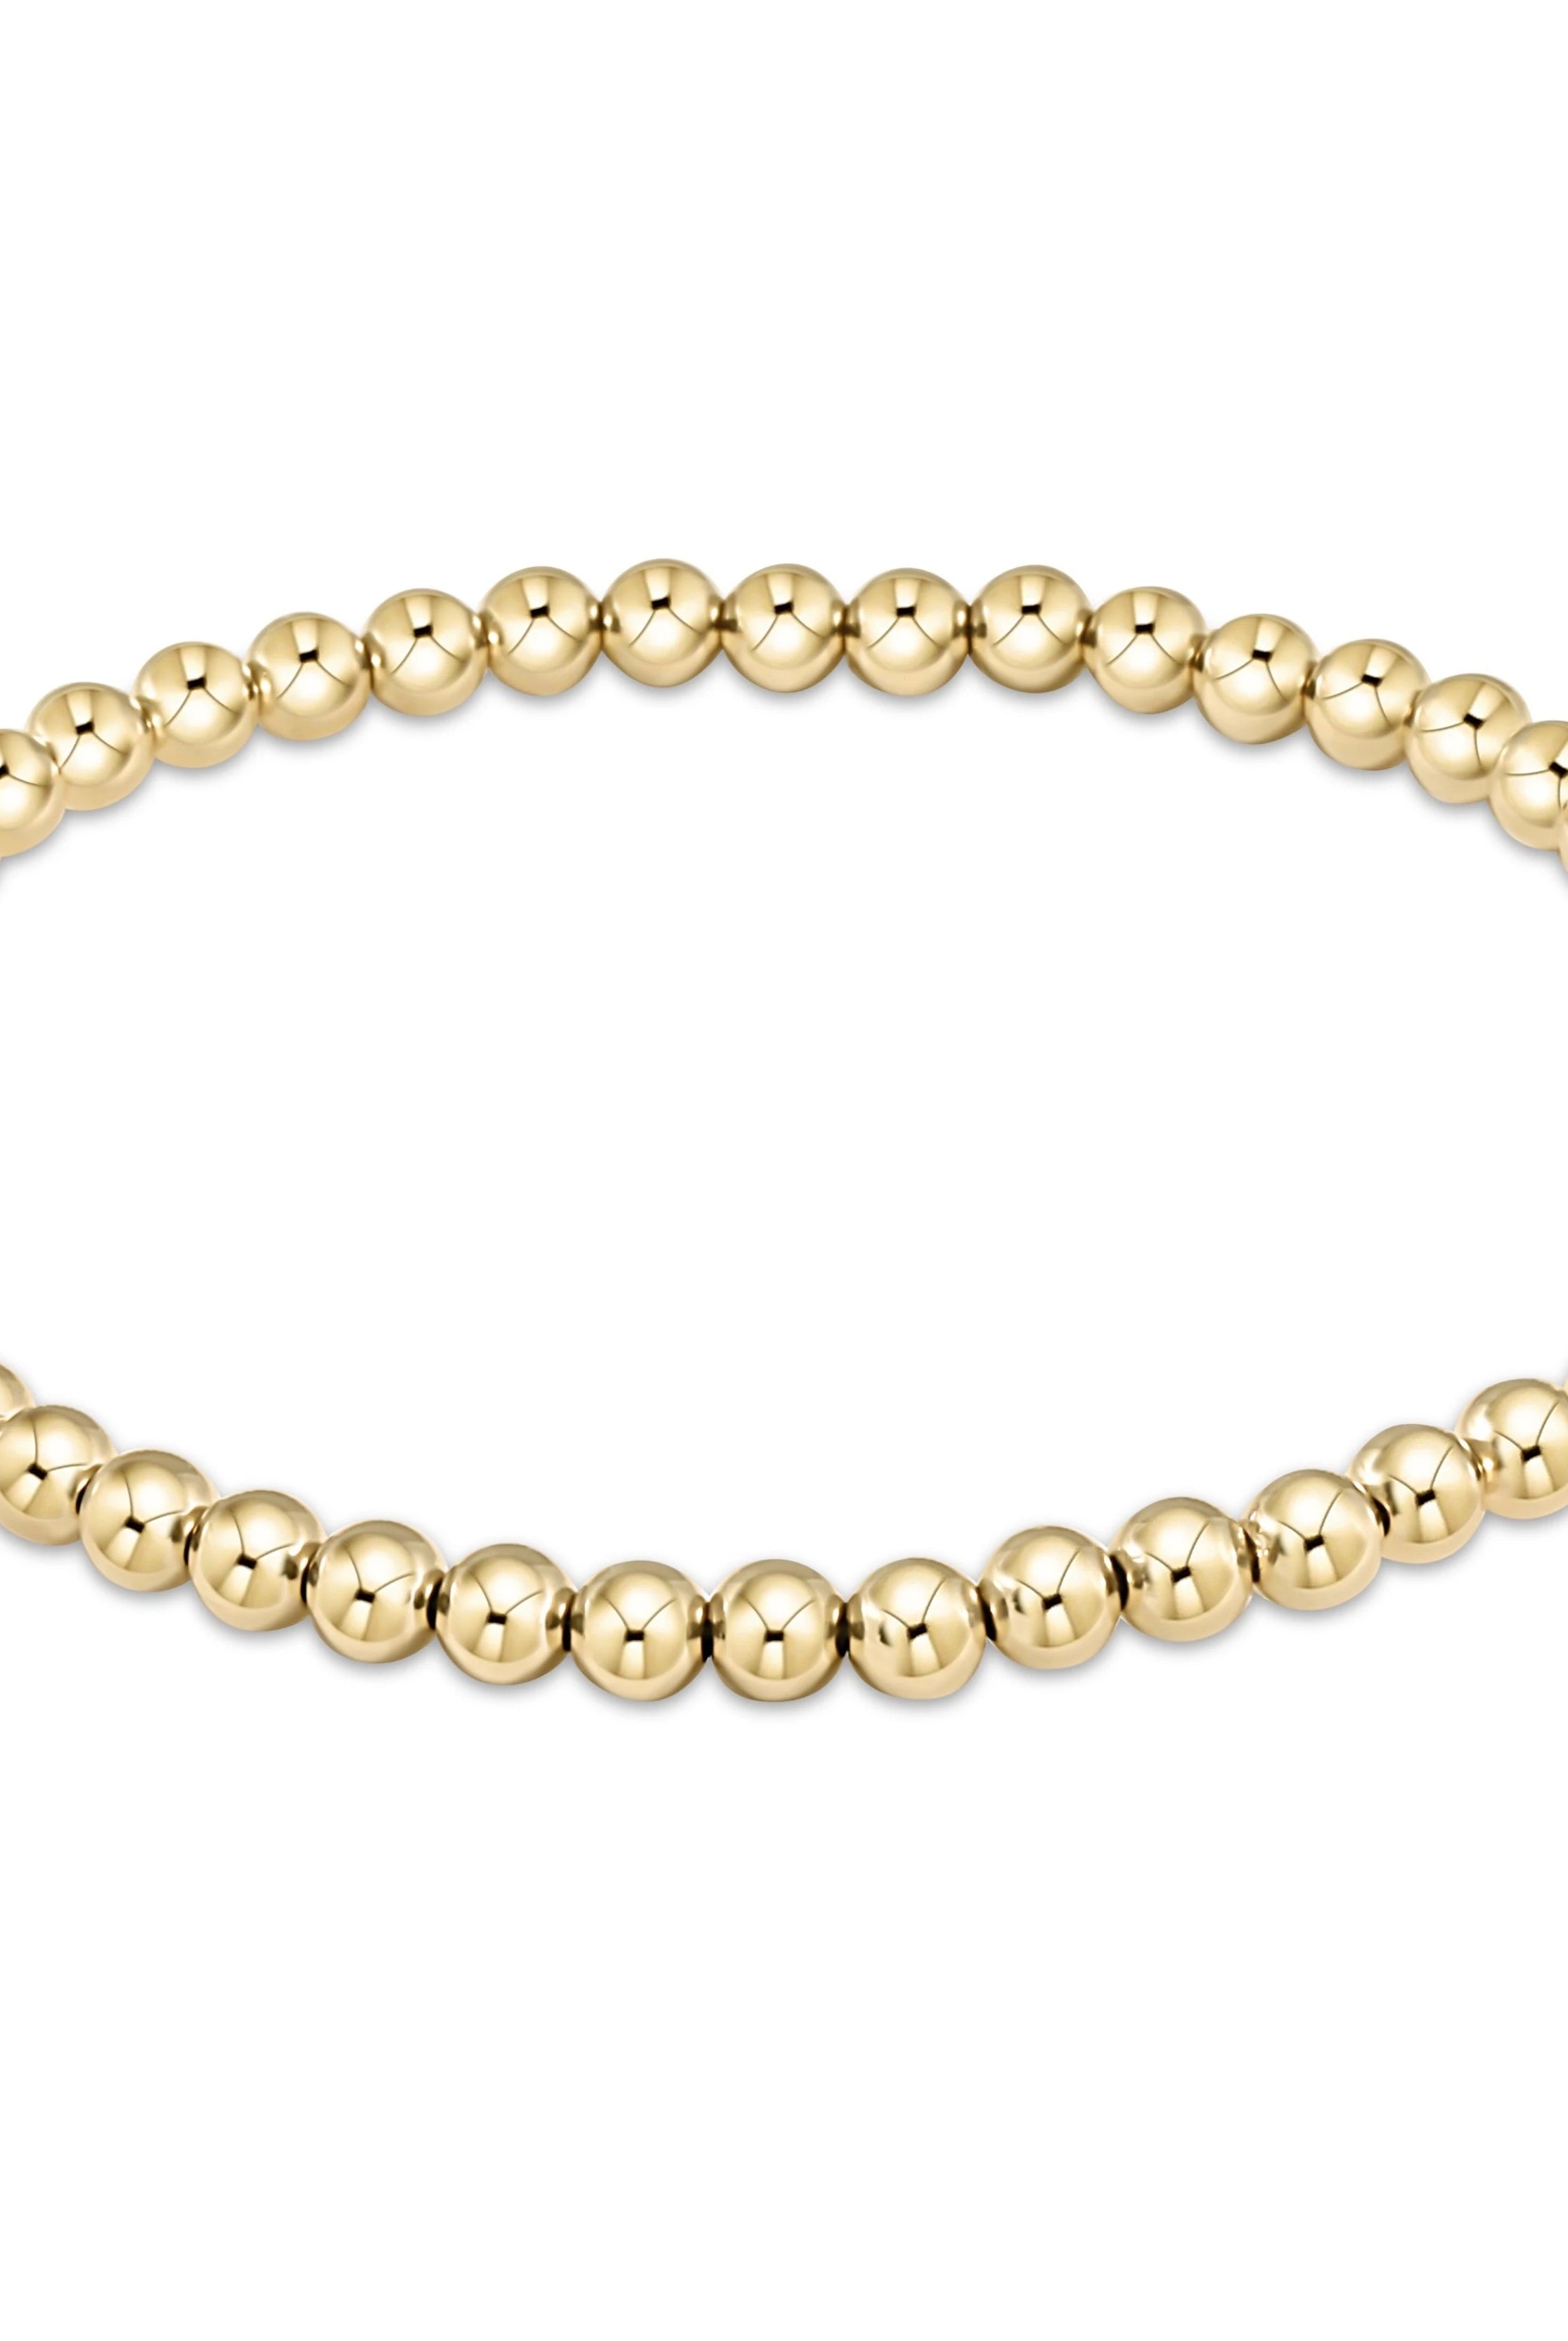 Classic Gold 4mm Bracelet-Bracelets-eNewton-The Lovely Closet, Women's Fashion Boutique in Alexandria, KY